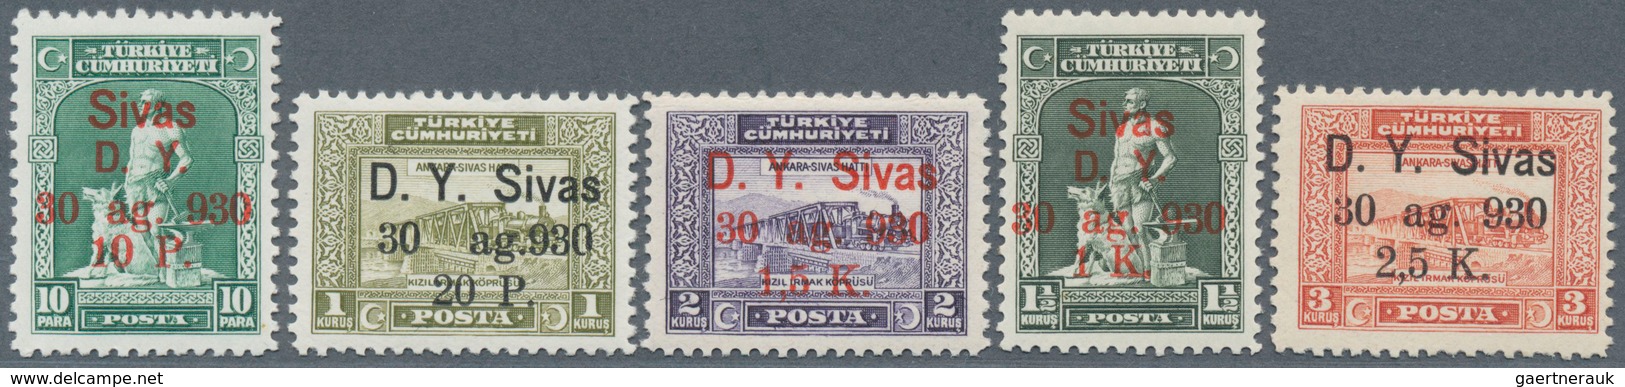 16337 Türkei: 1930, Sivas Railway Complete Set Of 22 Values Mint Never Hinged With Original Gum, Very Fine - Storia Postale